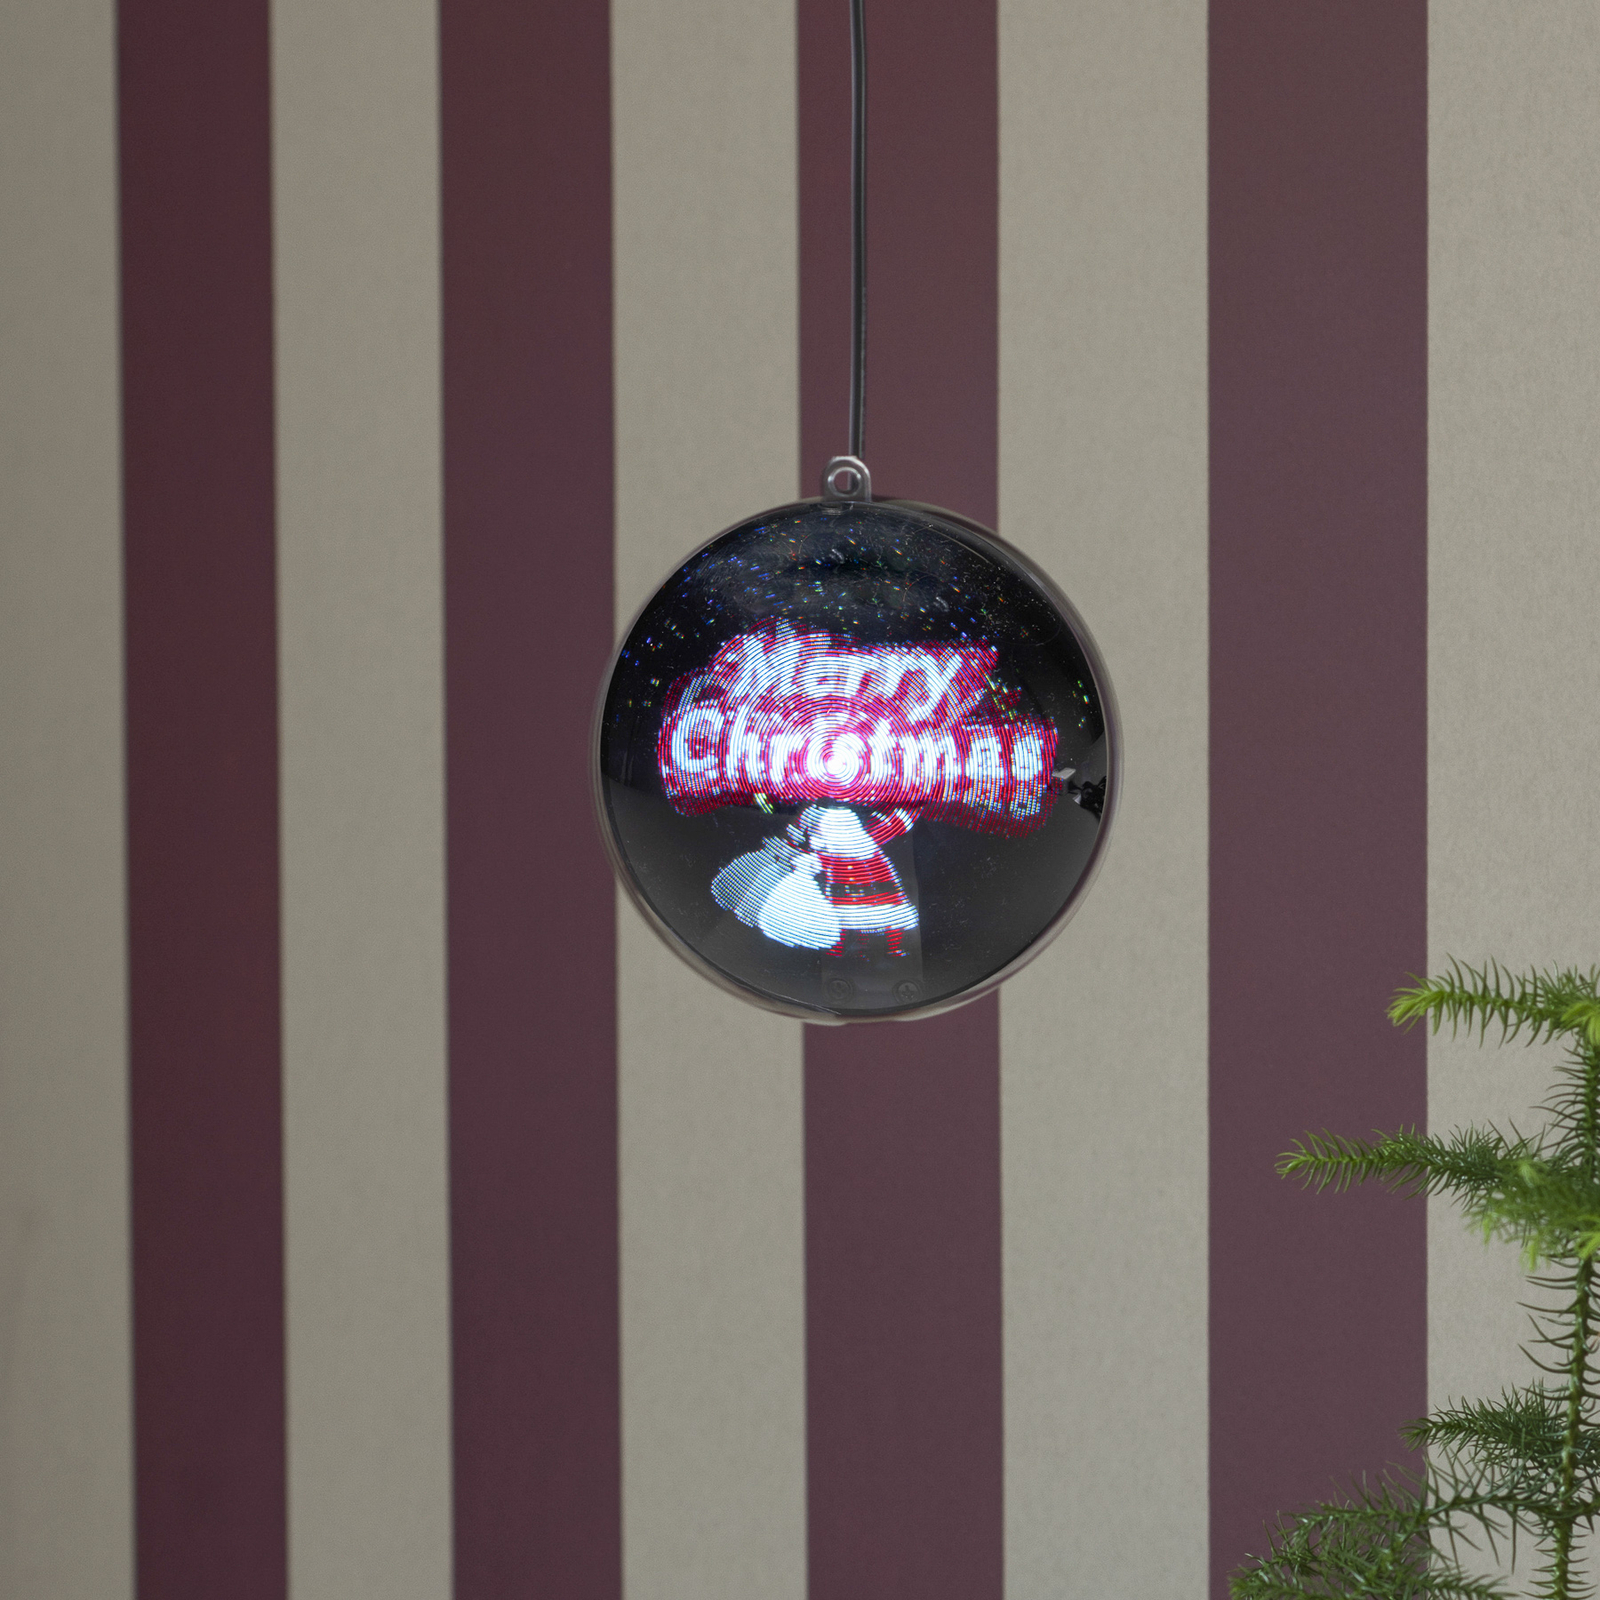 Merry Christmas 3D hologram globe, 64 LEDs